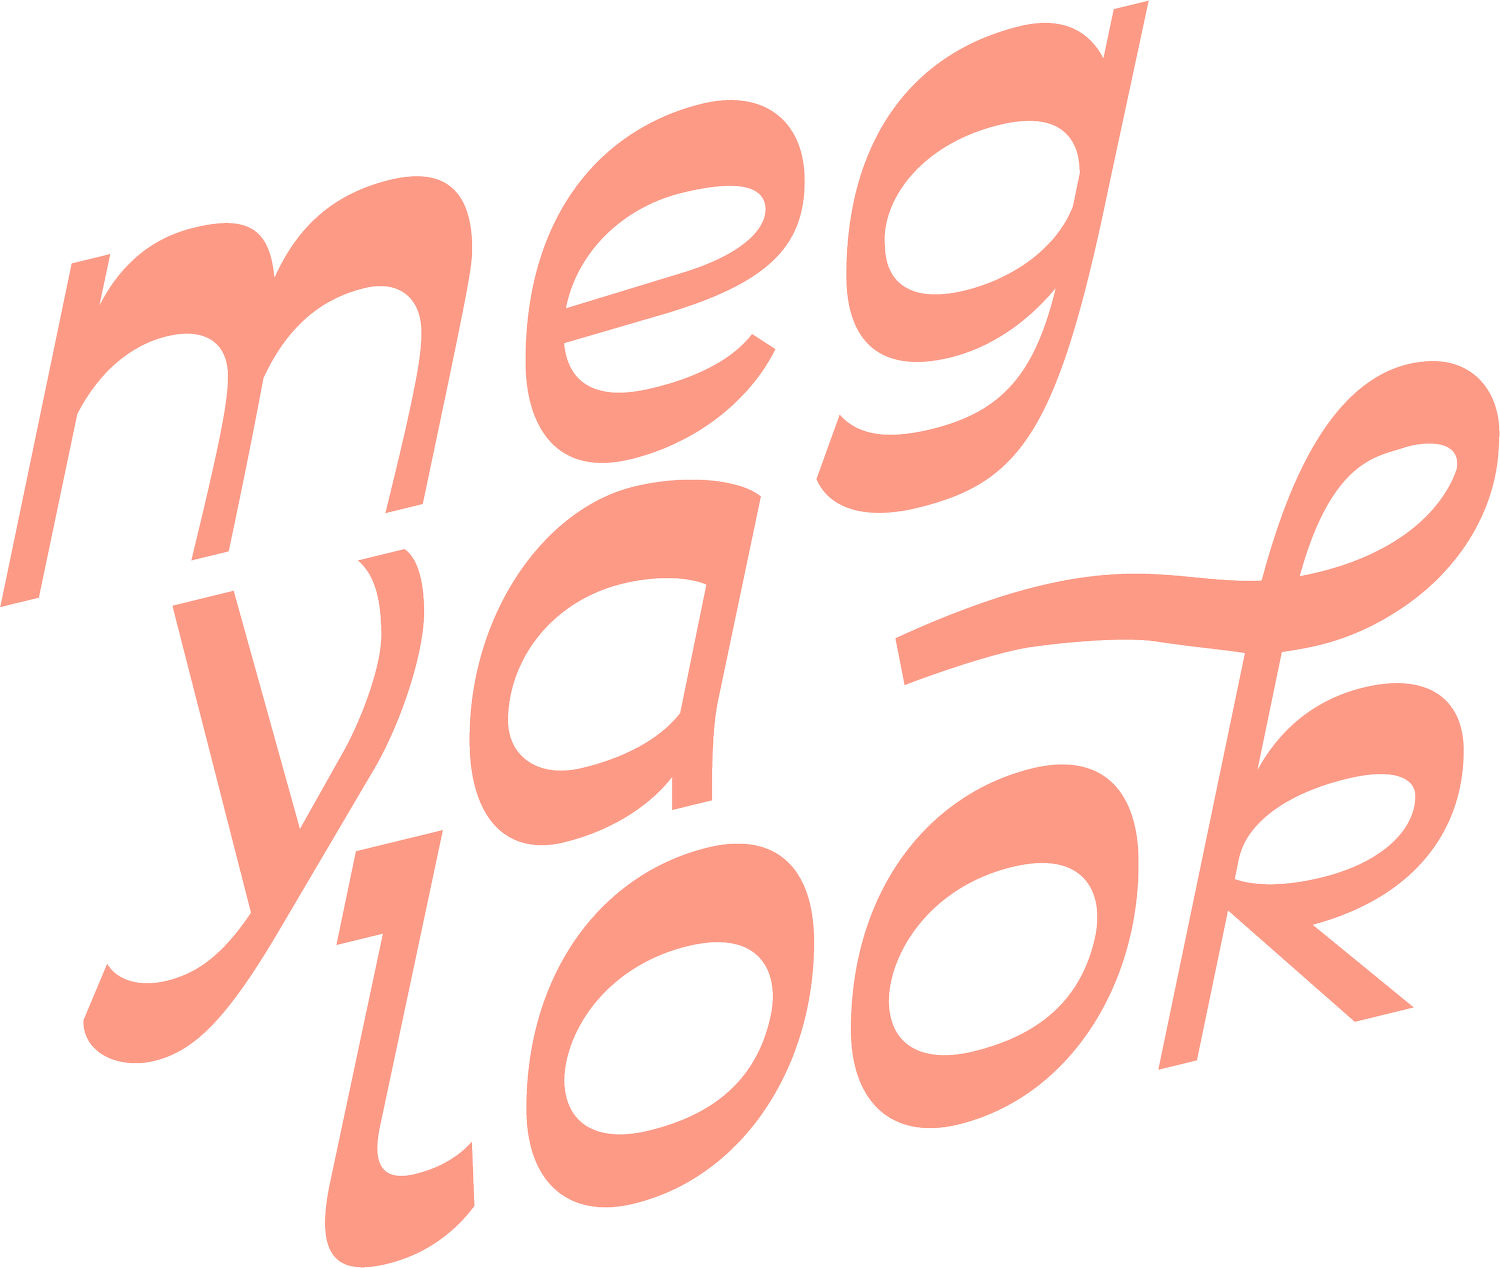 Meg Ya Look! 〰️ Waves of Emotions 